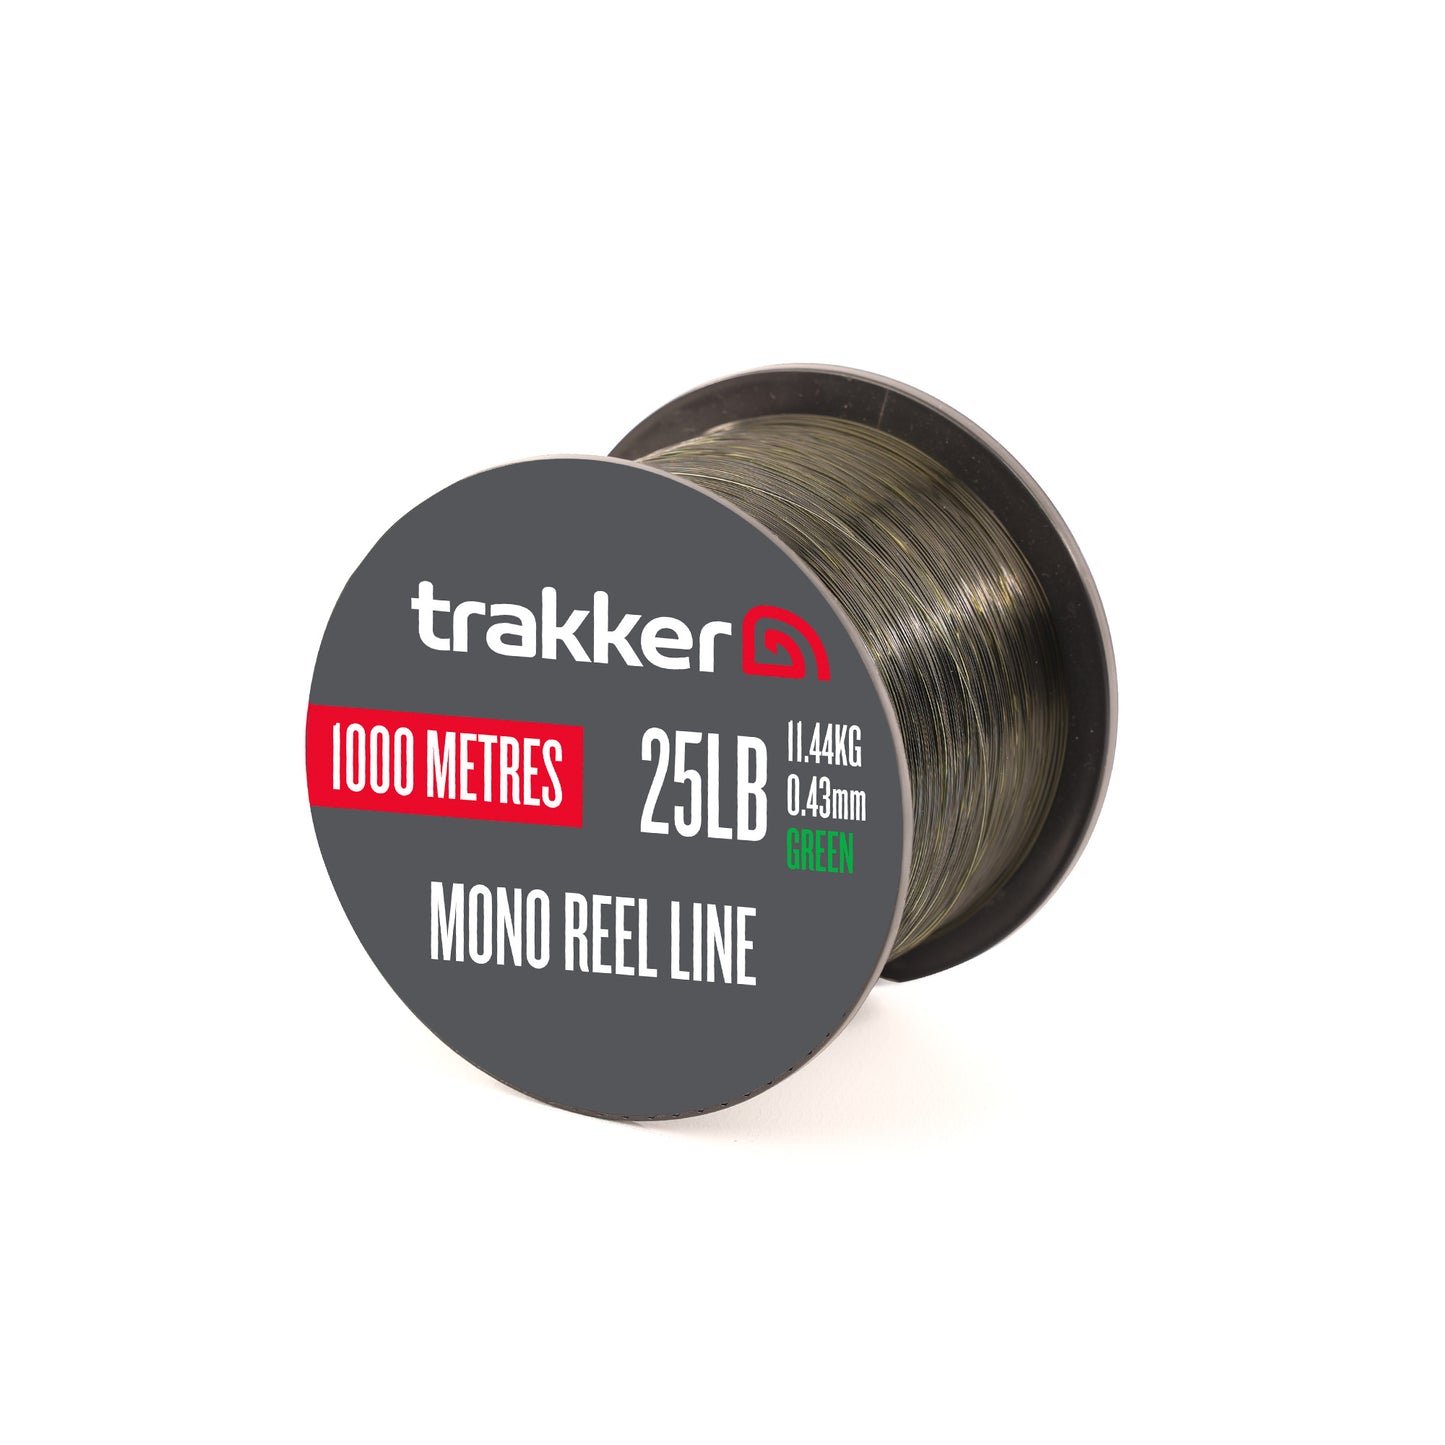 TRAKKER TRAKKER Mono Reel Line (1000m) TRAKKER Mono Reel Line (25lb)(11.44kg)(0.43mm)(1000m) - Parkfield Angling Centre